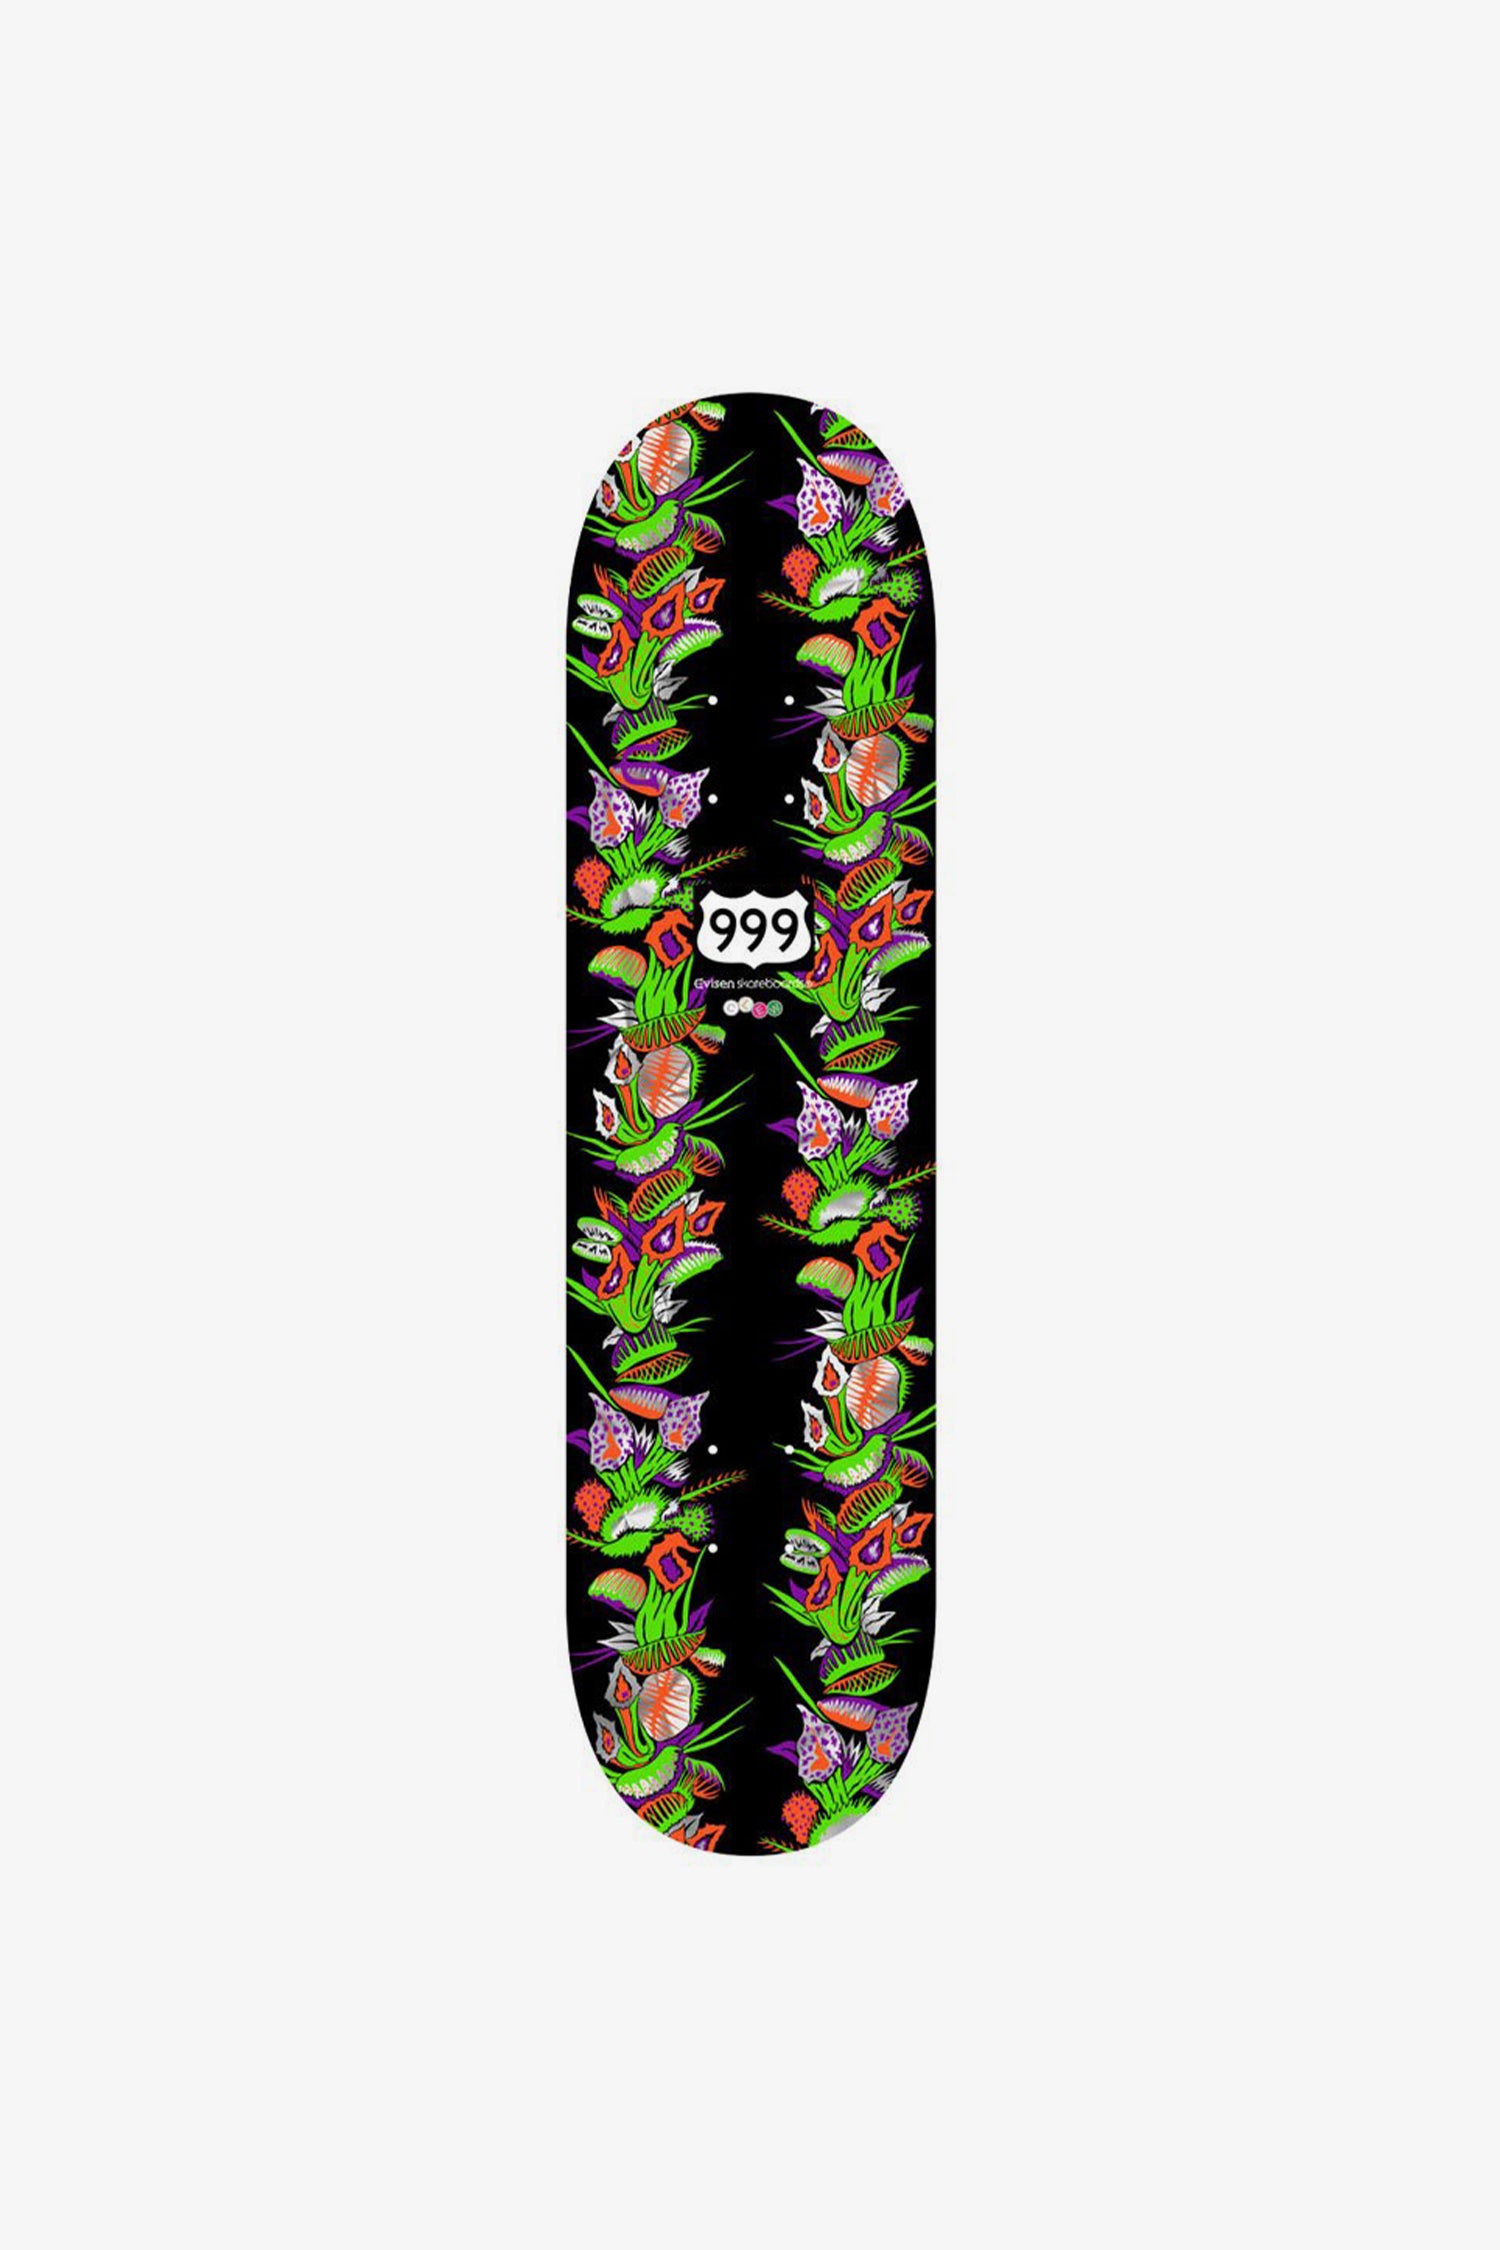 Selectshop FRAME - EVISEN Nepenthe Deck Skateboards Dubai